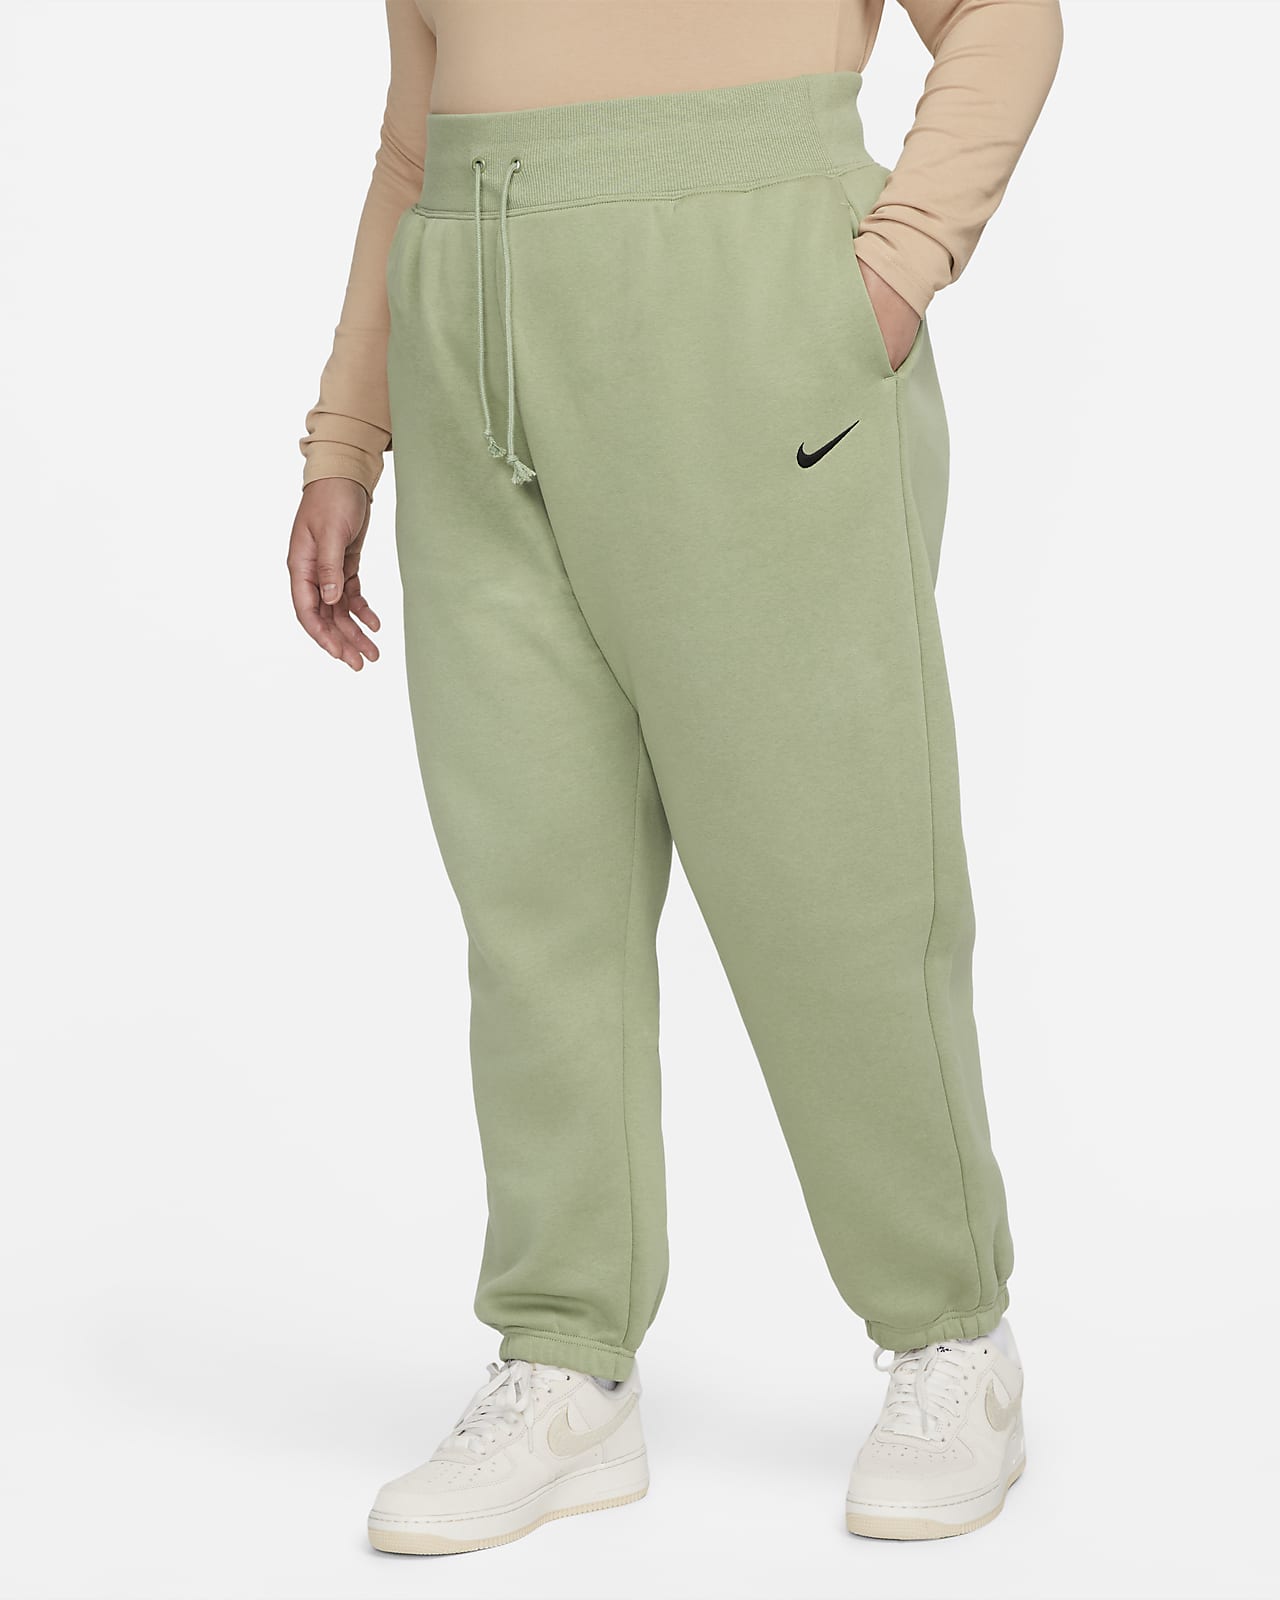 Nike Swoosh Fly Standard Issue Basketball Pants W